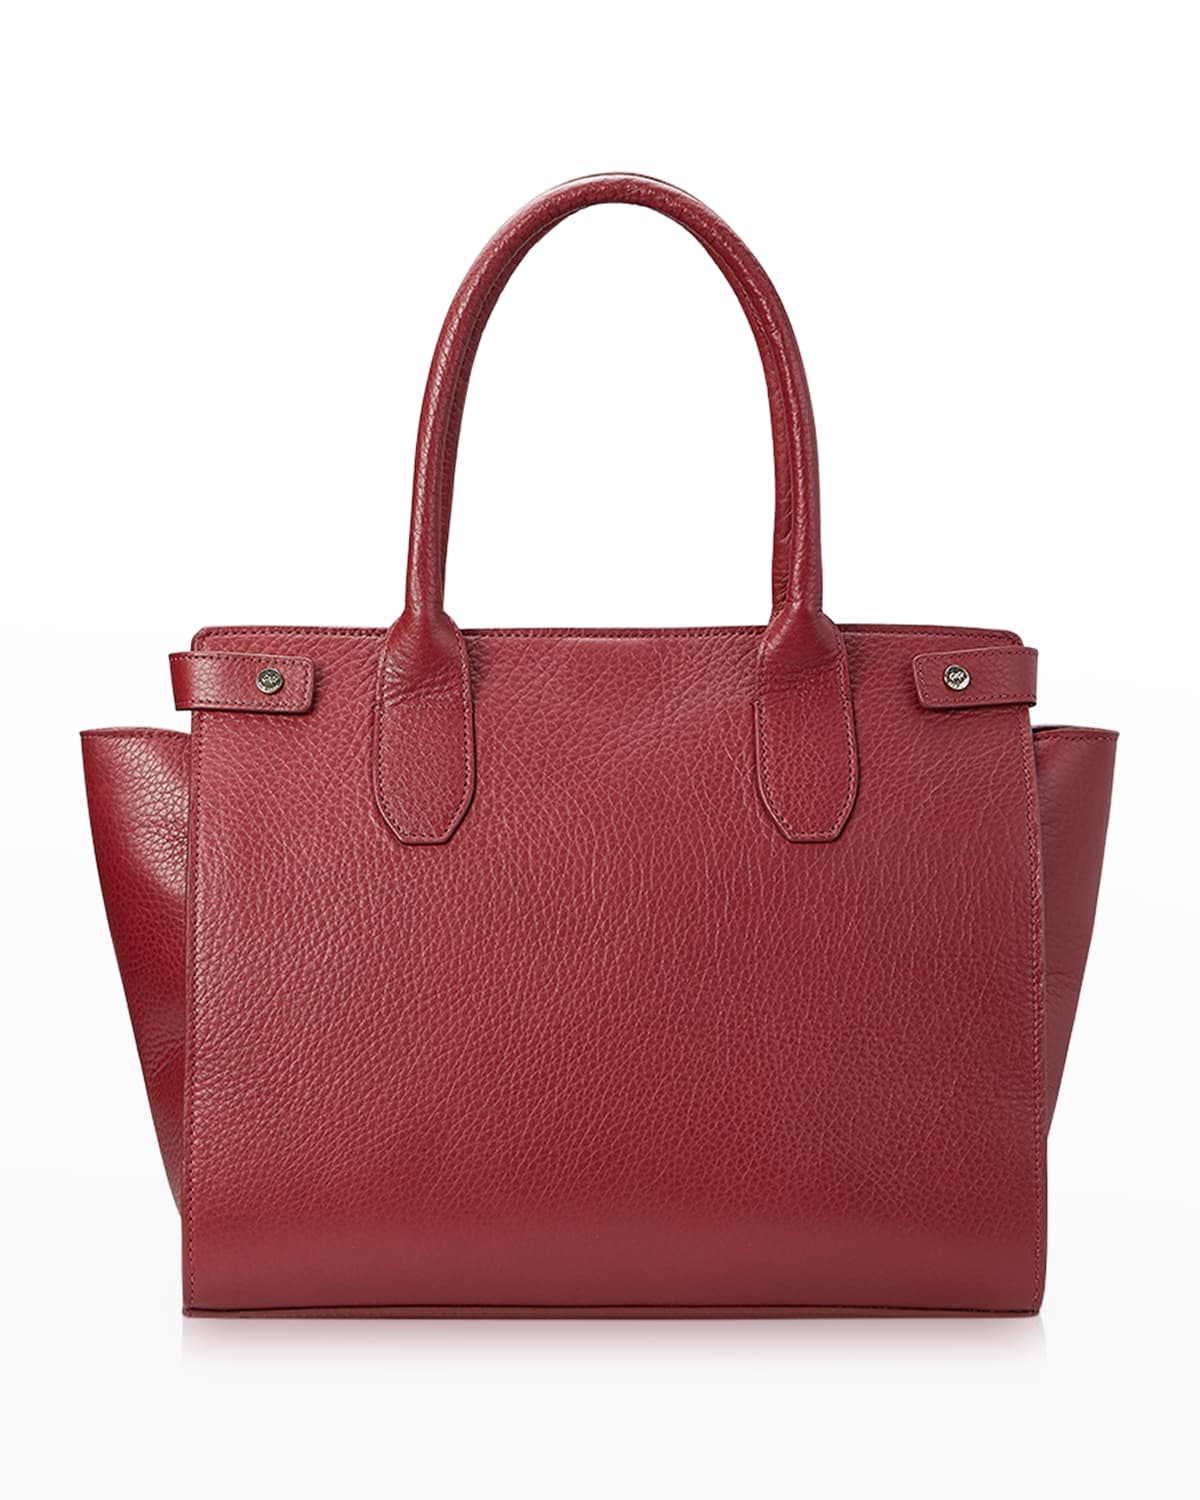 Reese Leather Top Handle Satchel Bag